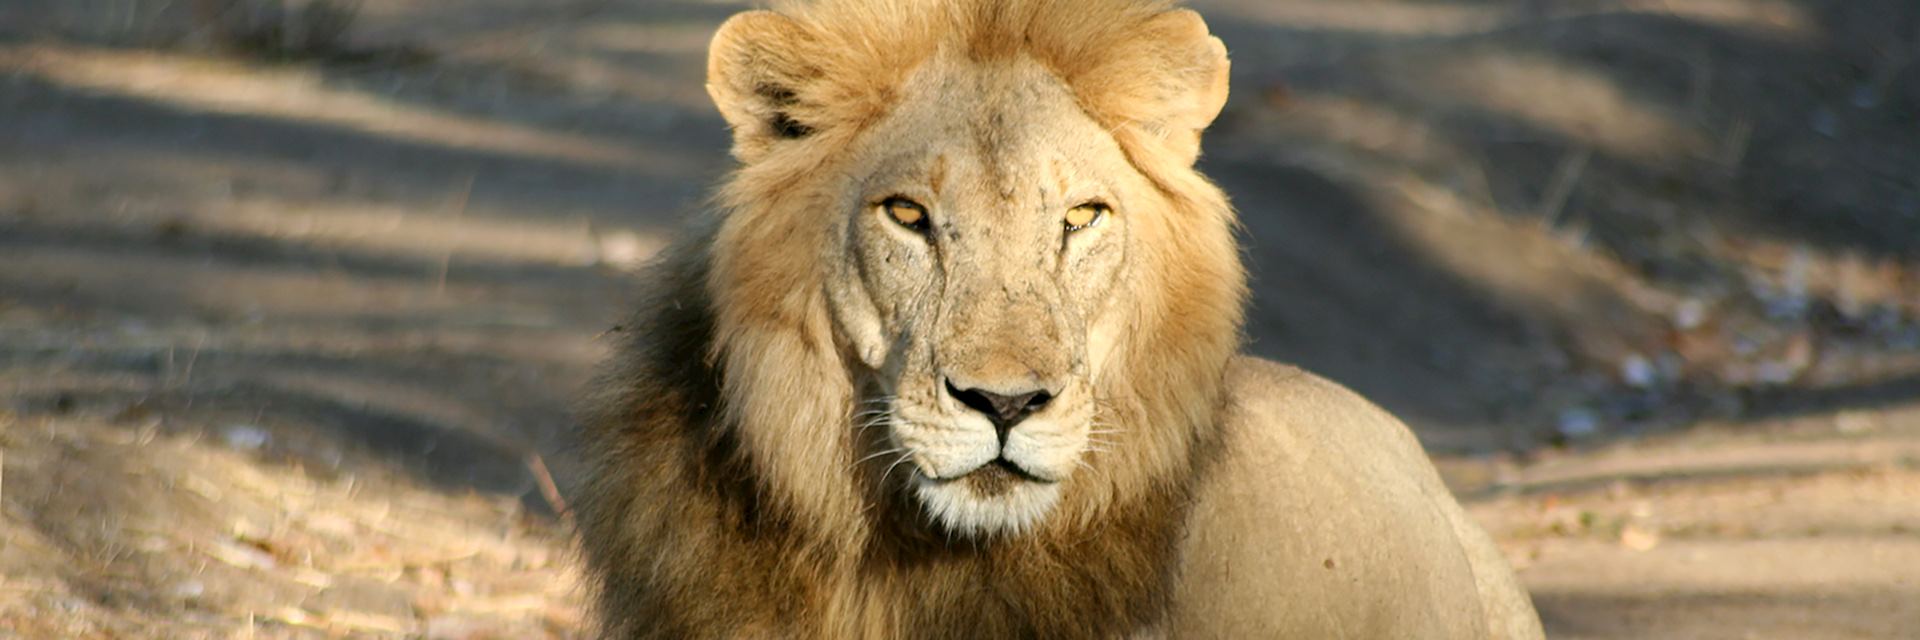 Lion, Ruaha National Park